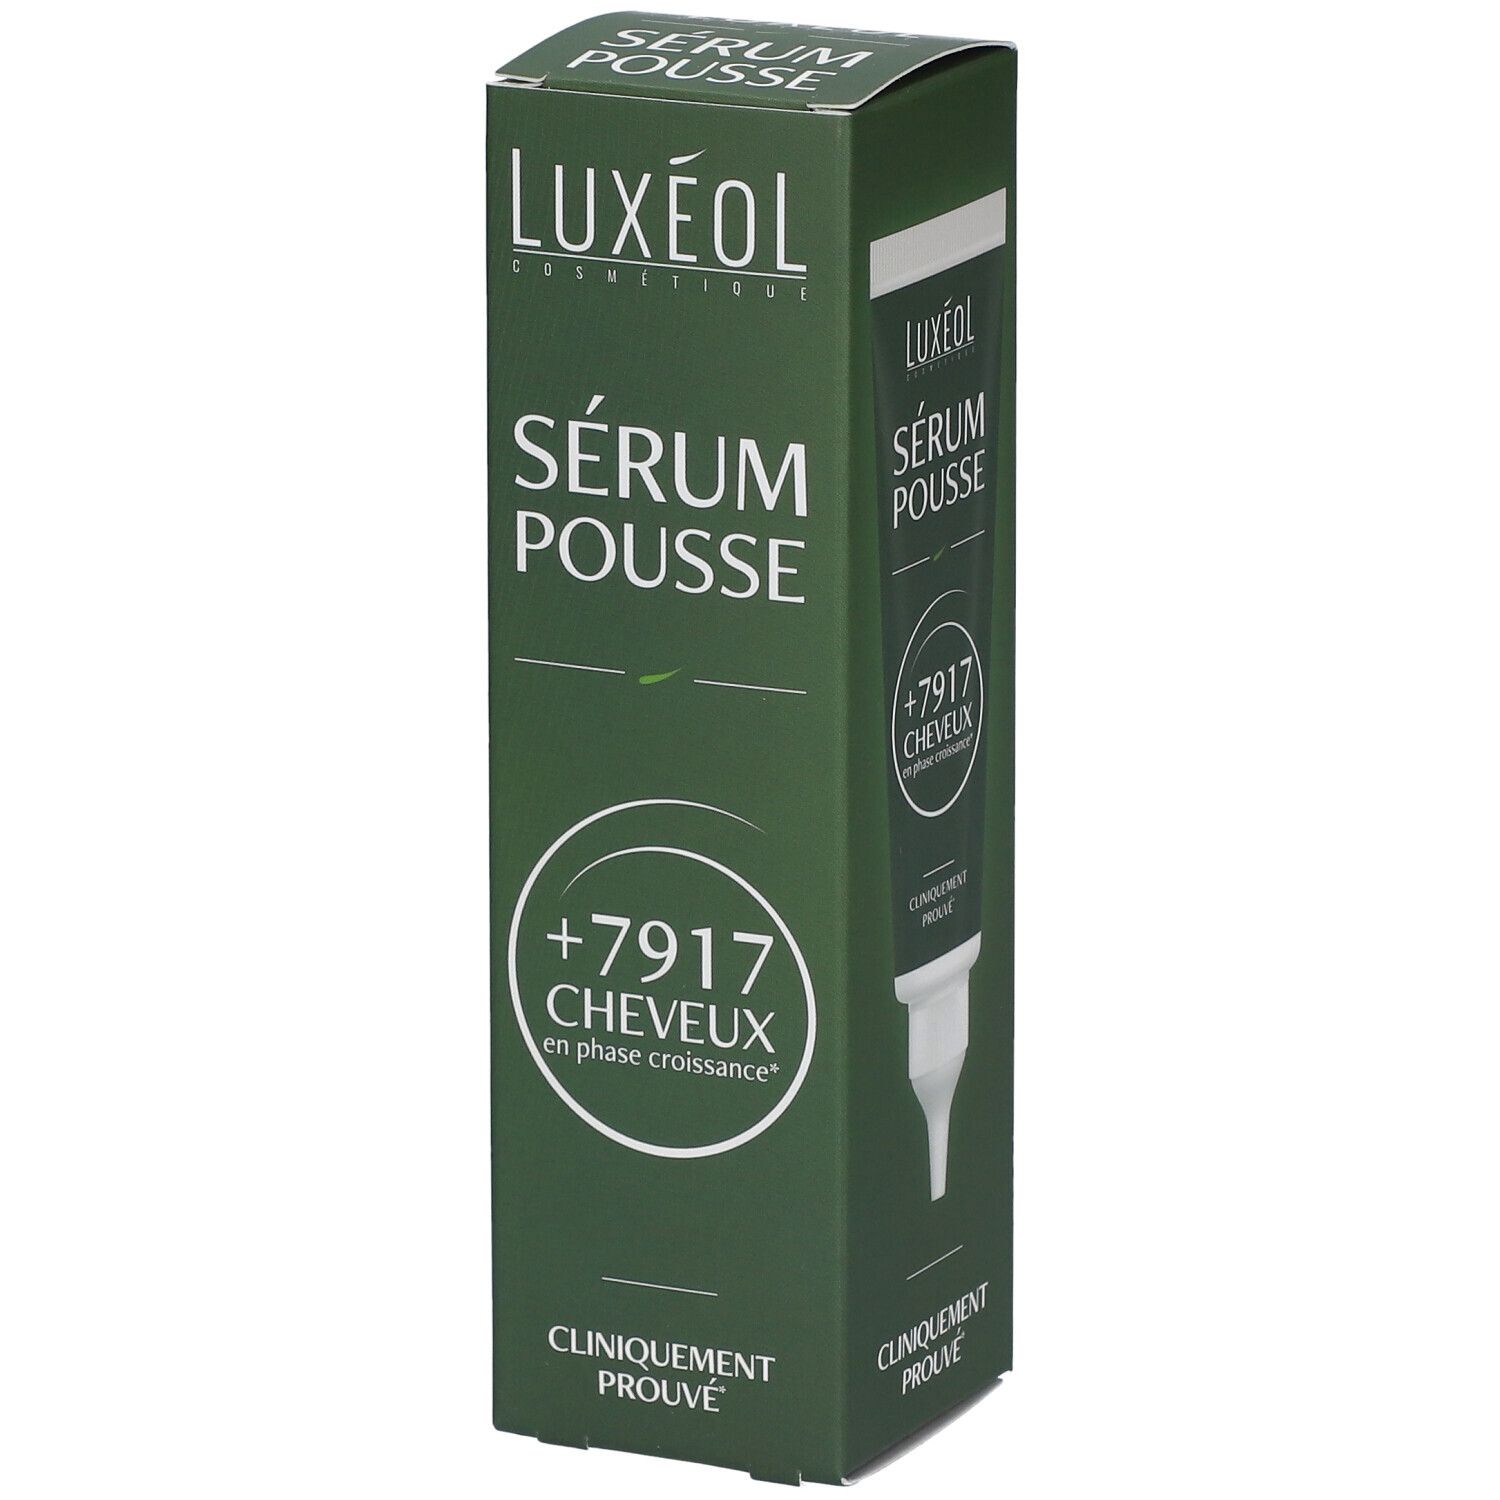 Image of Luxeol Push-Serum